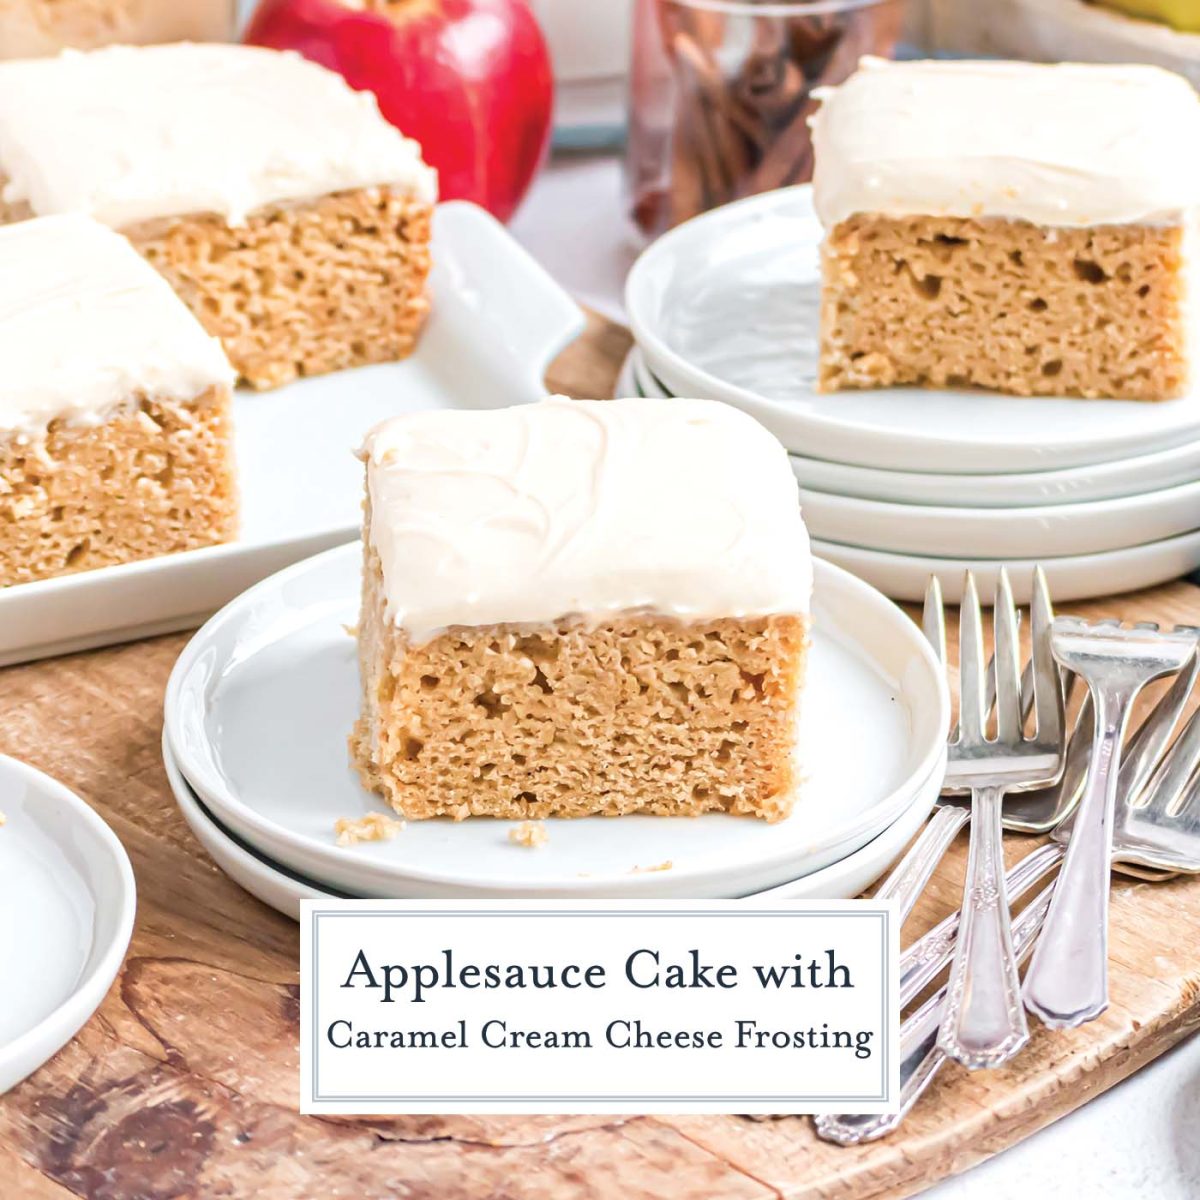 National Applesauce Cake Day - Fun Food Holiday | CDKitchen